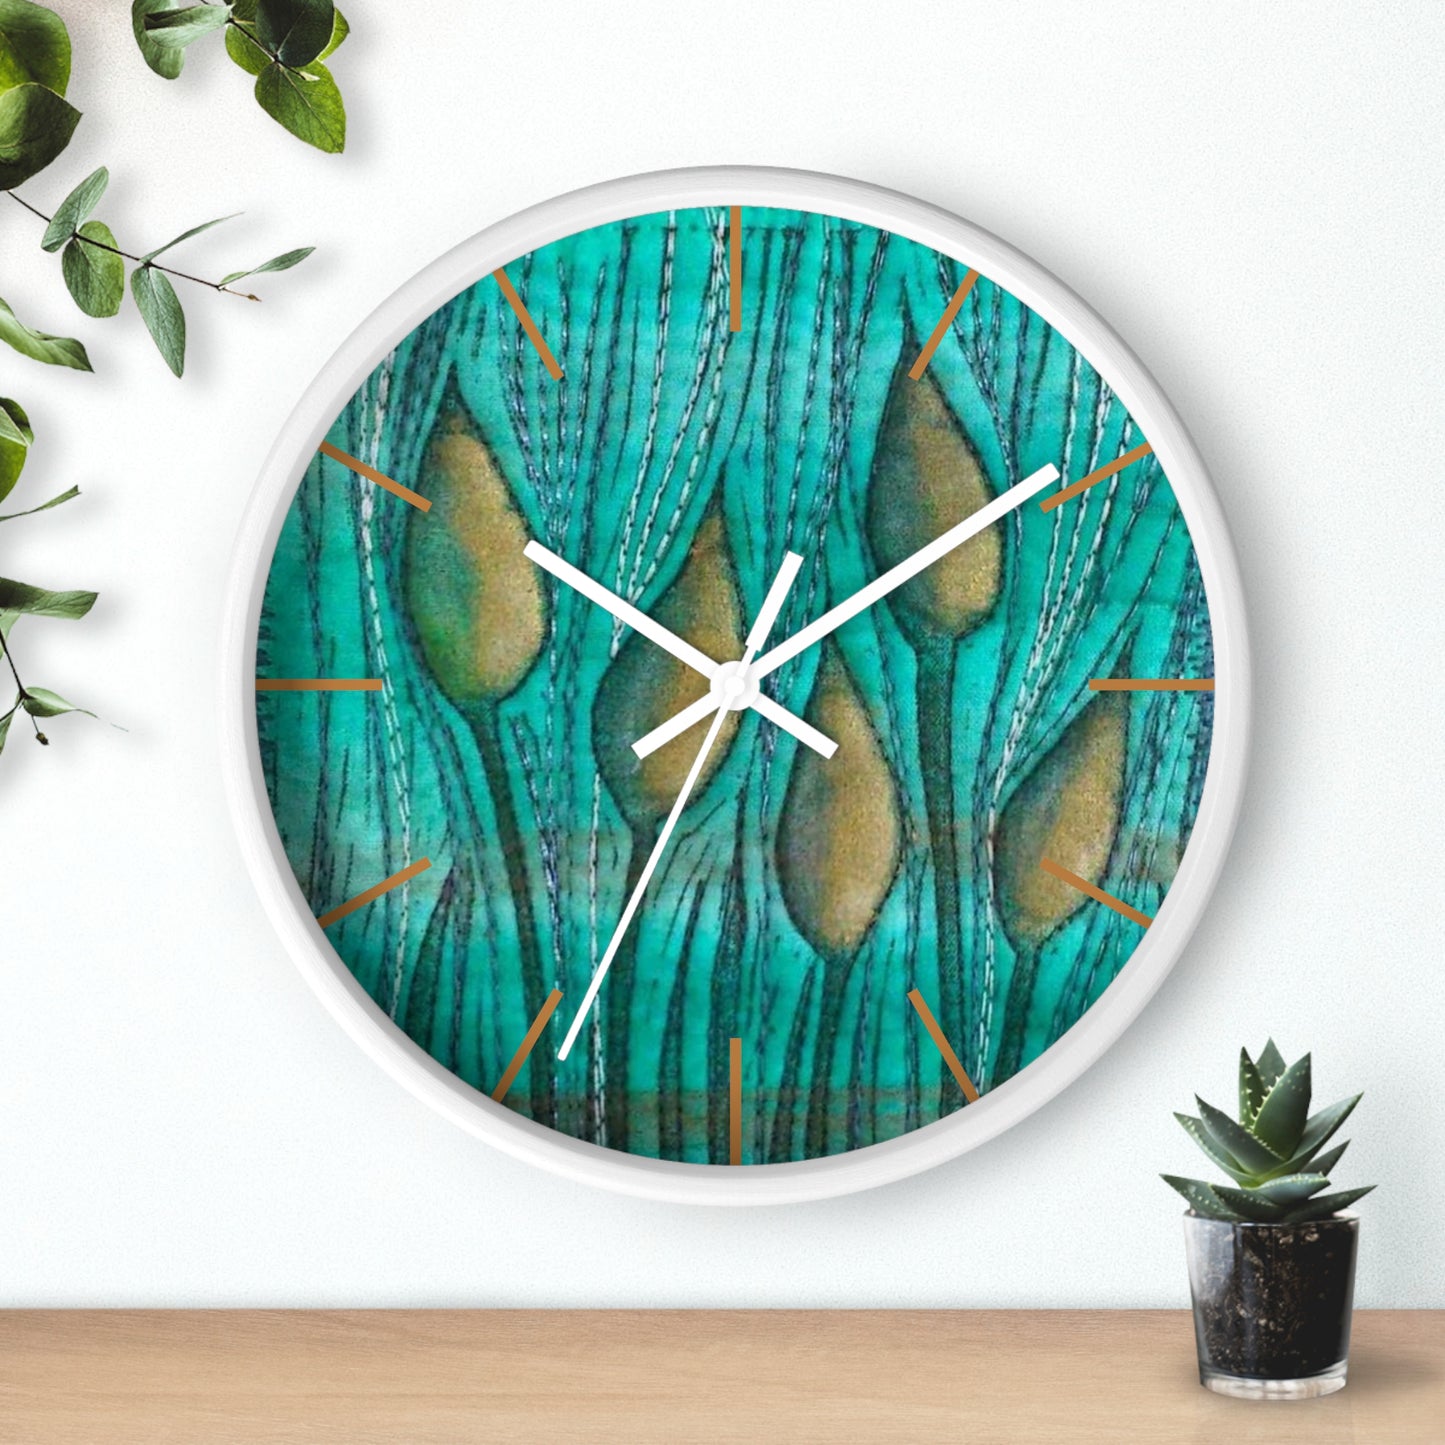 Turquoise Plantscape Wall Clock